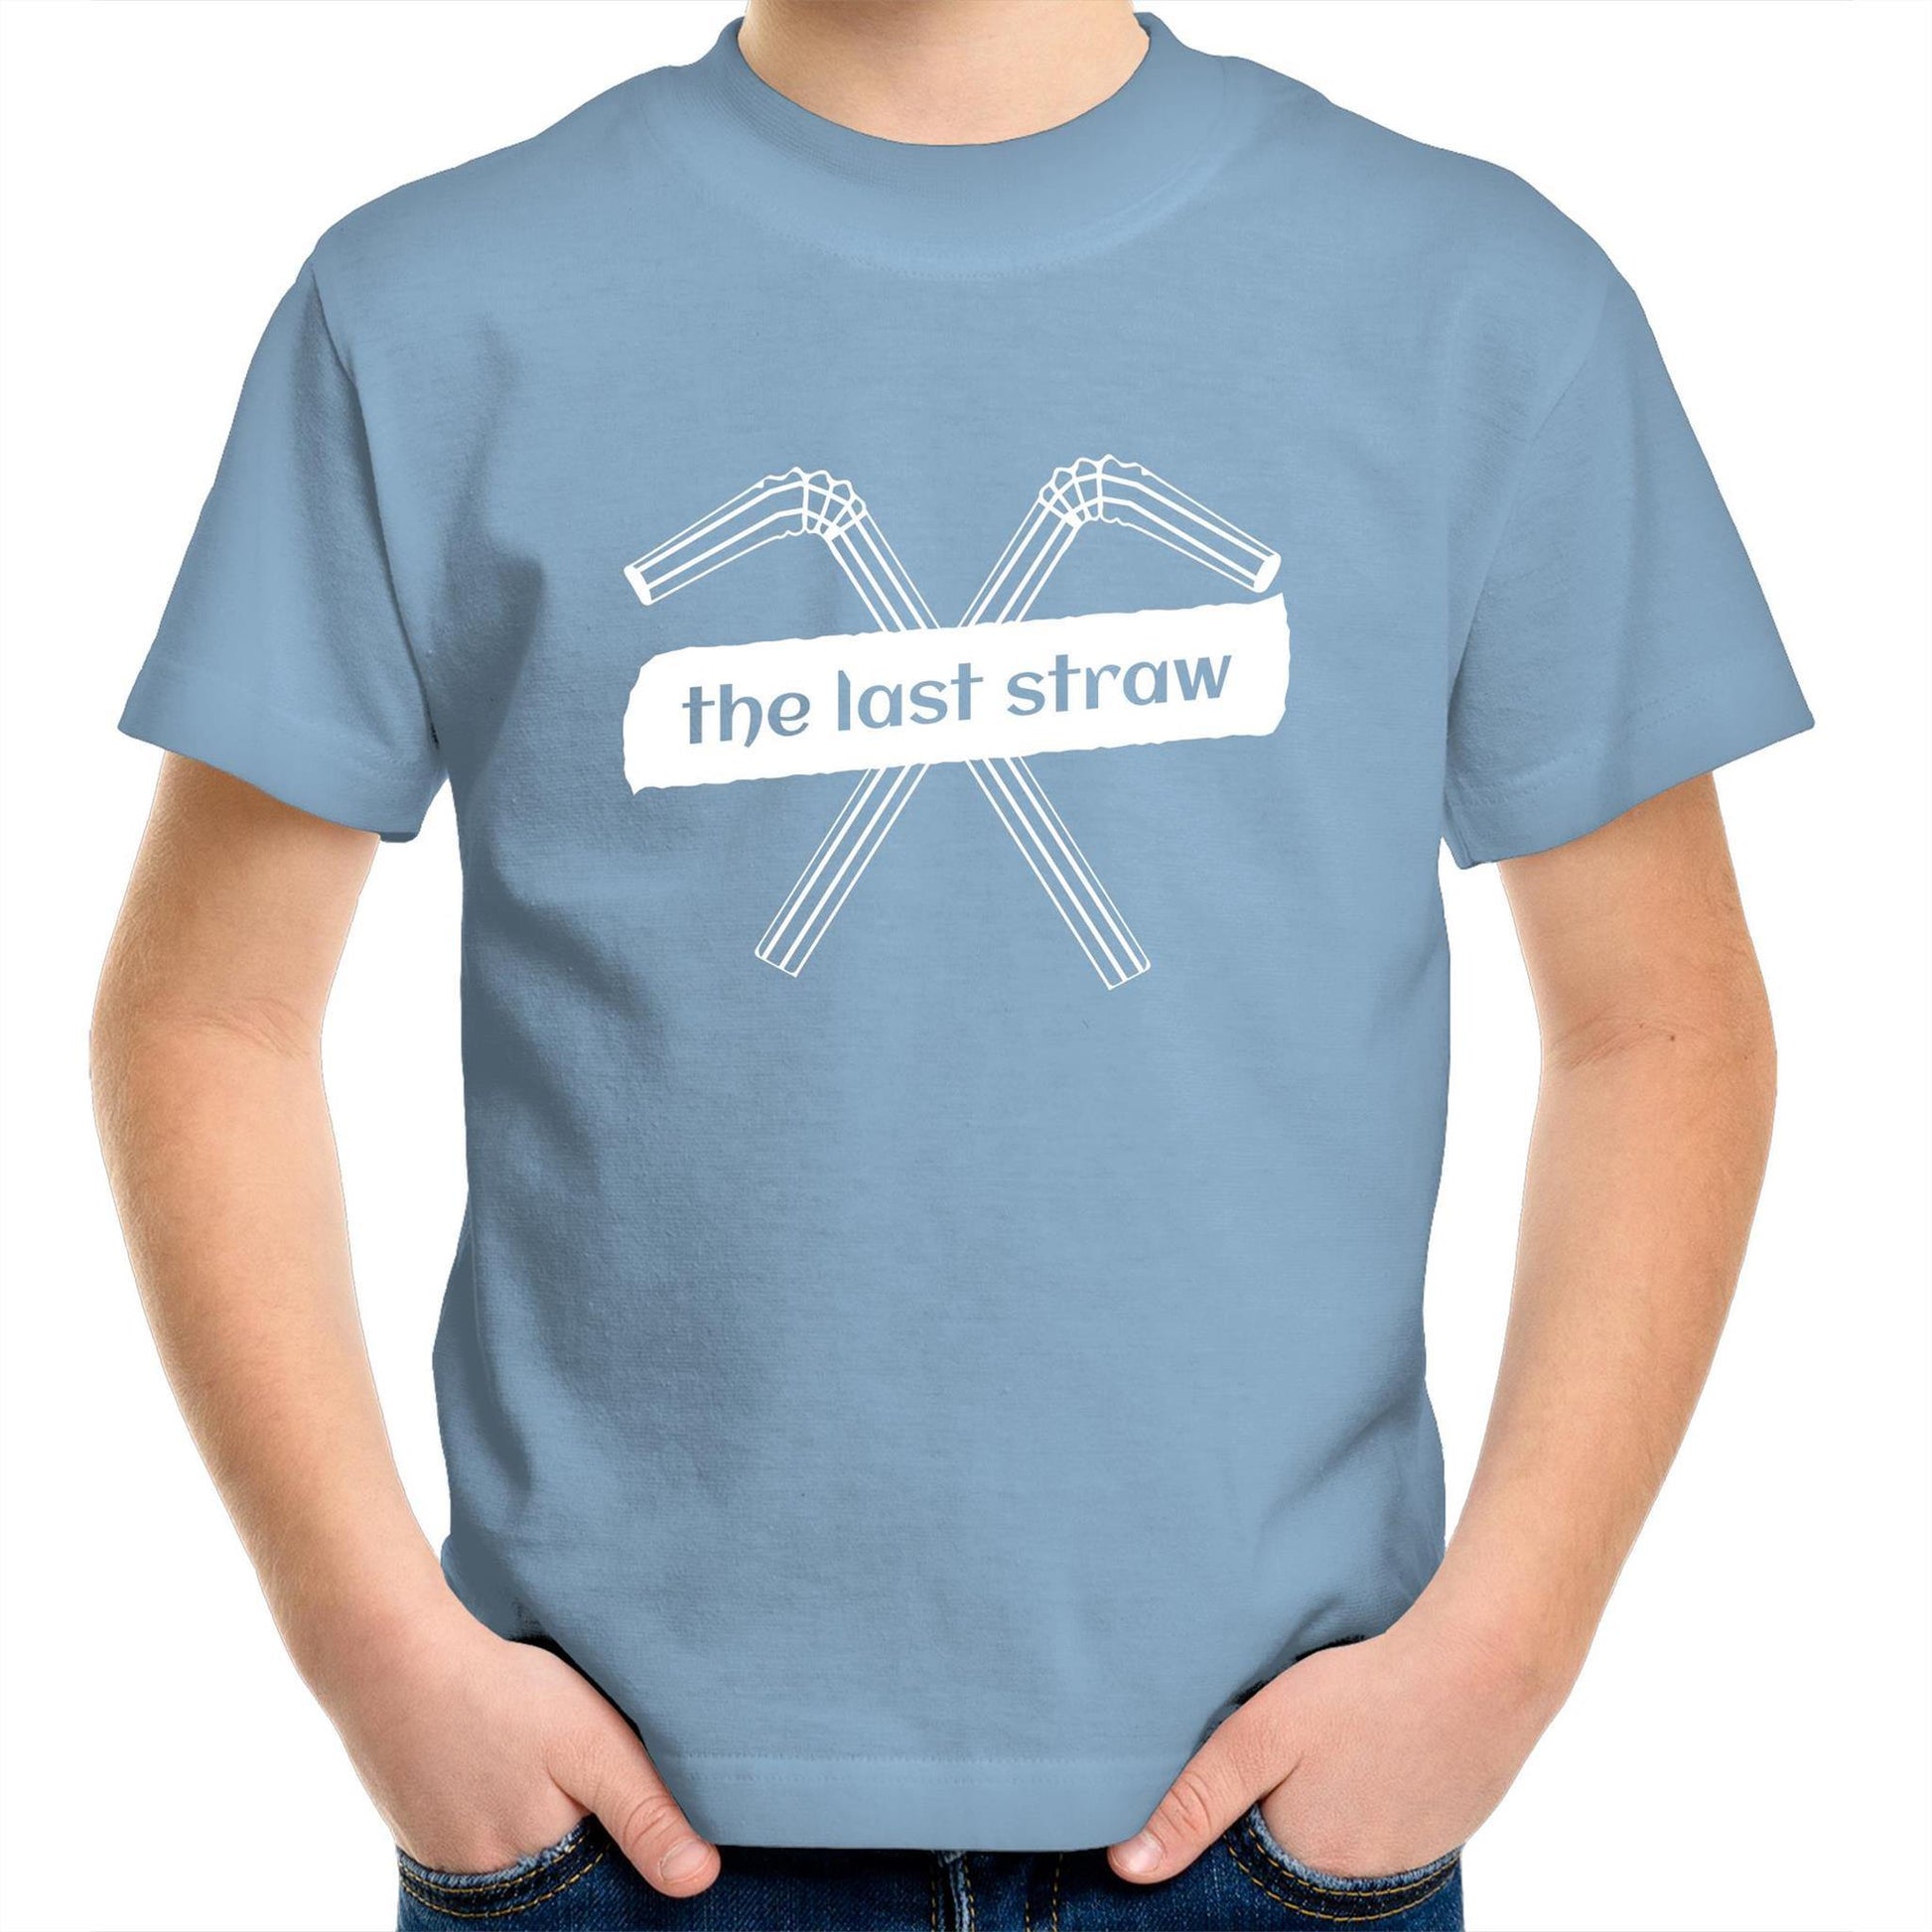 The Last Straw - Kids Youth Crew T-Shirt Carolina Blue Kids Youth T-shirt Environment